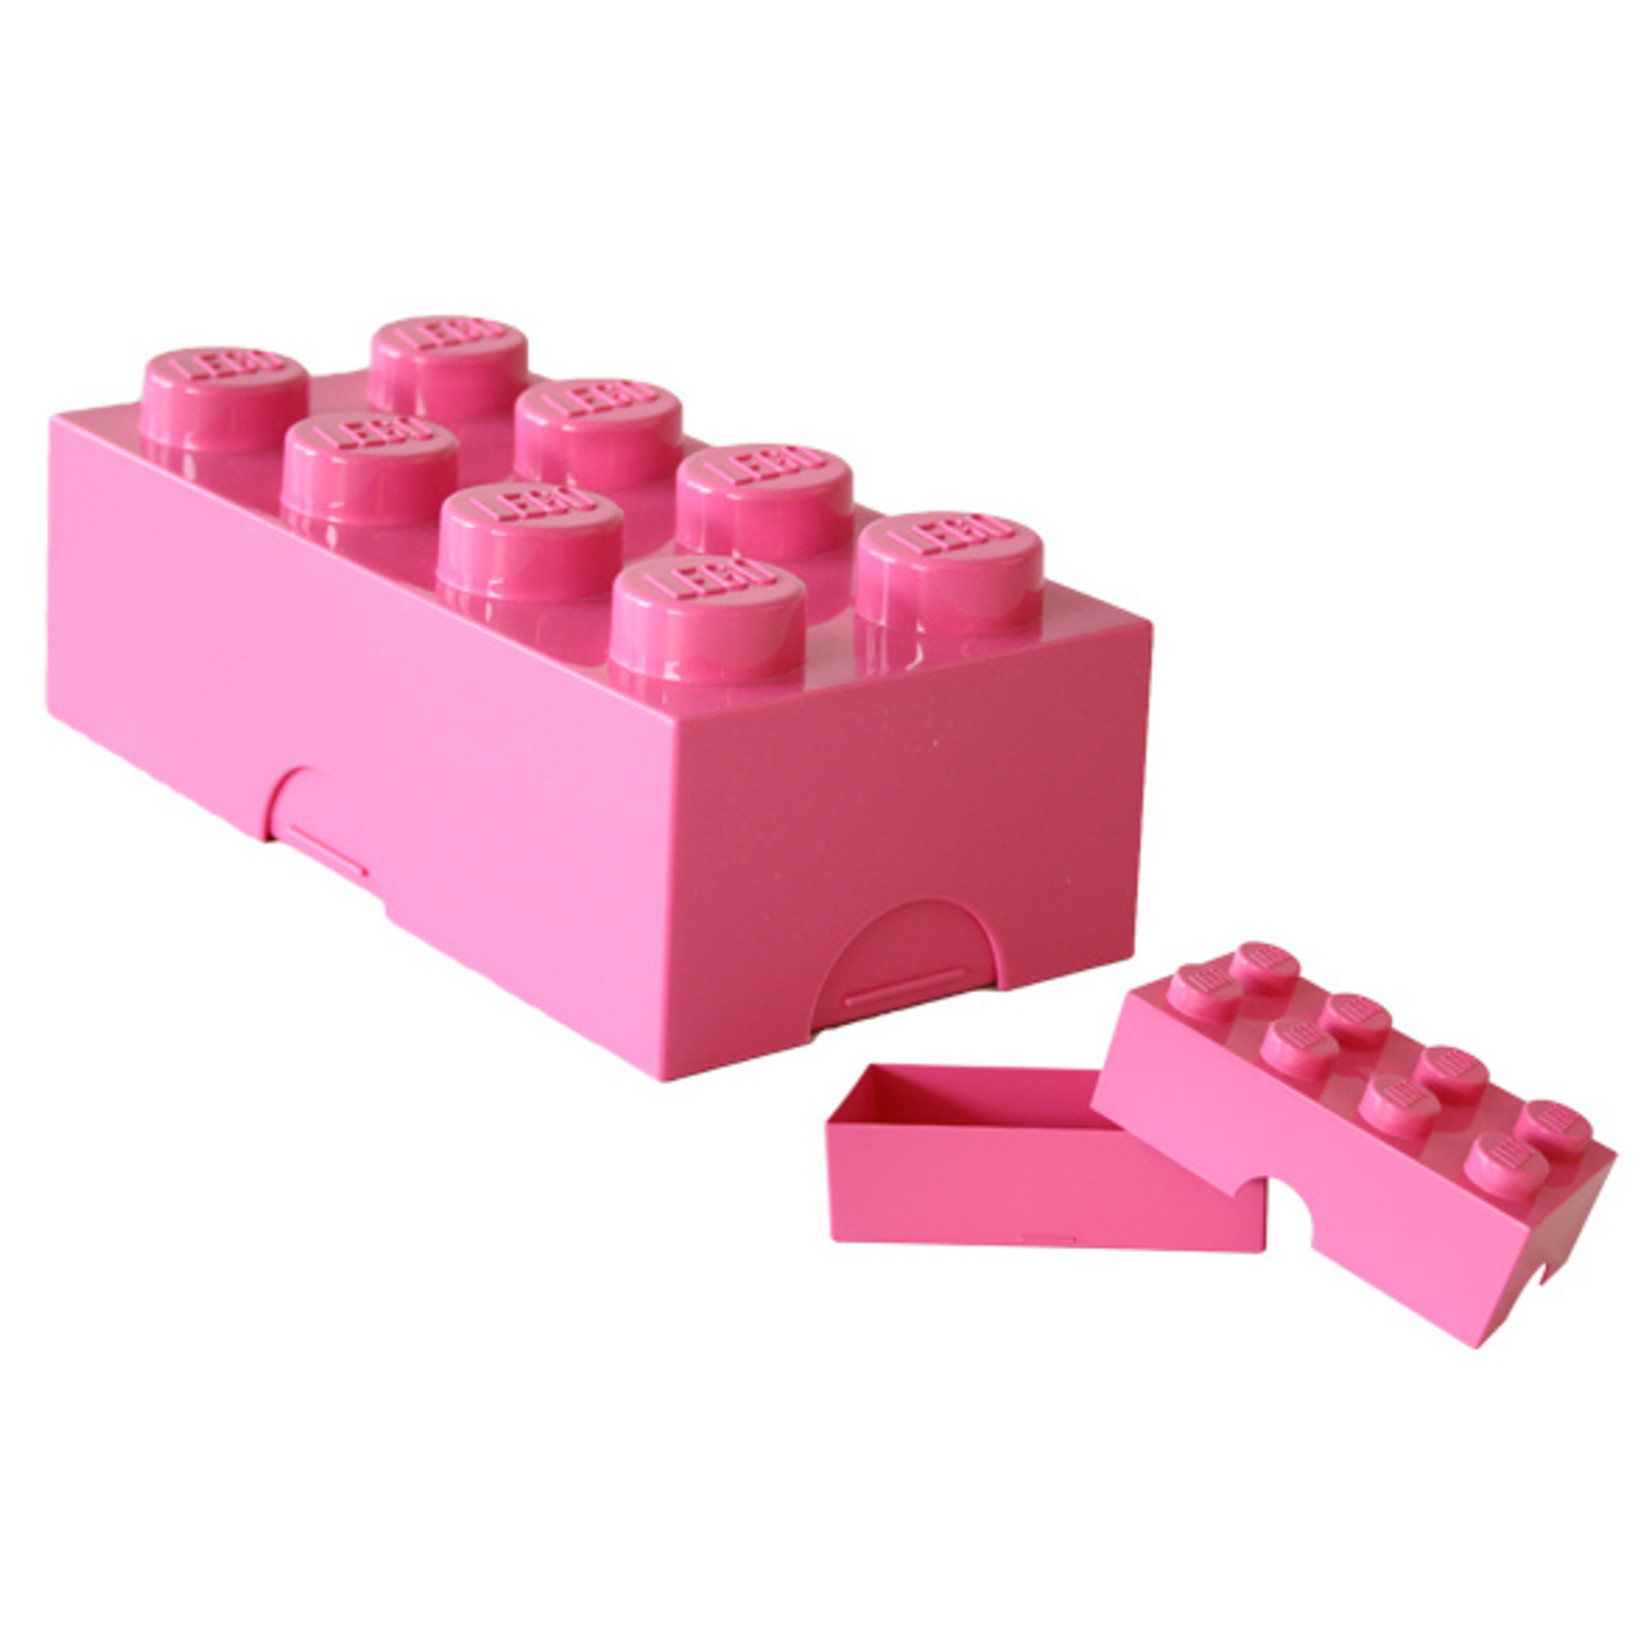 bereiken Leuk vinden Arab Lego Lunchbox Brick 8 roze - Meaningful Presents